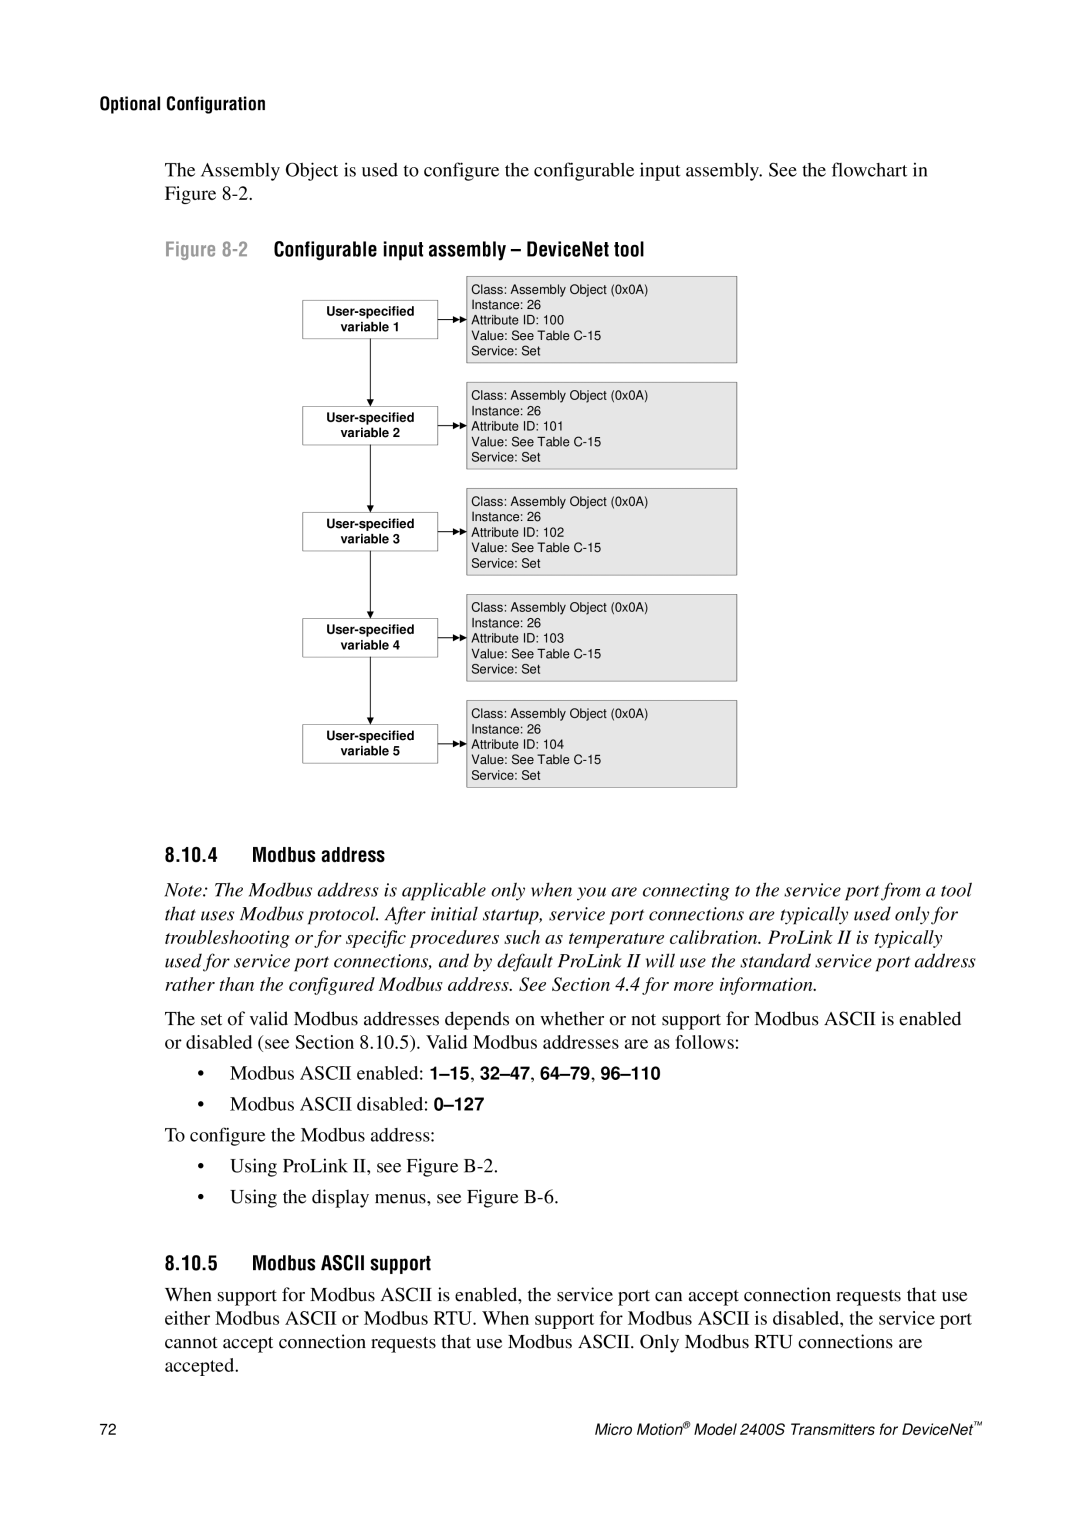 Emerson Process Management 2400S manual 8.10.4Modbus address, 8.10.5Modbus ASCII support 